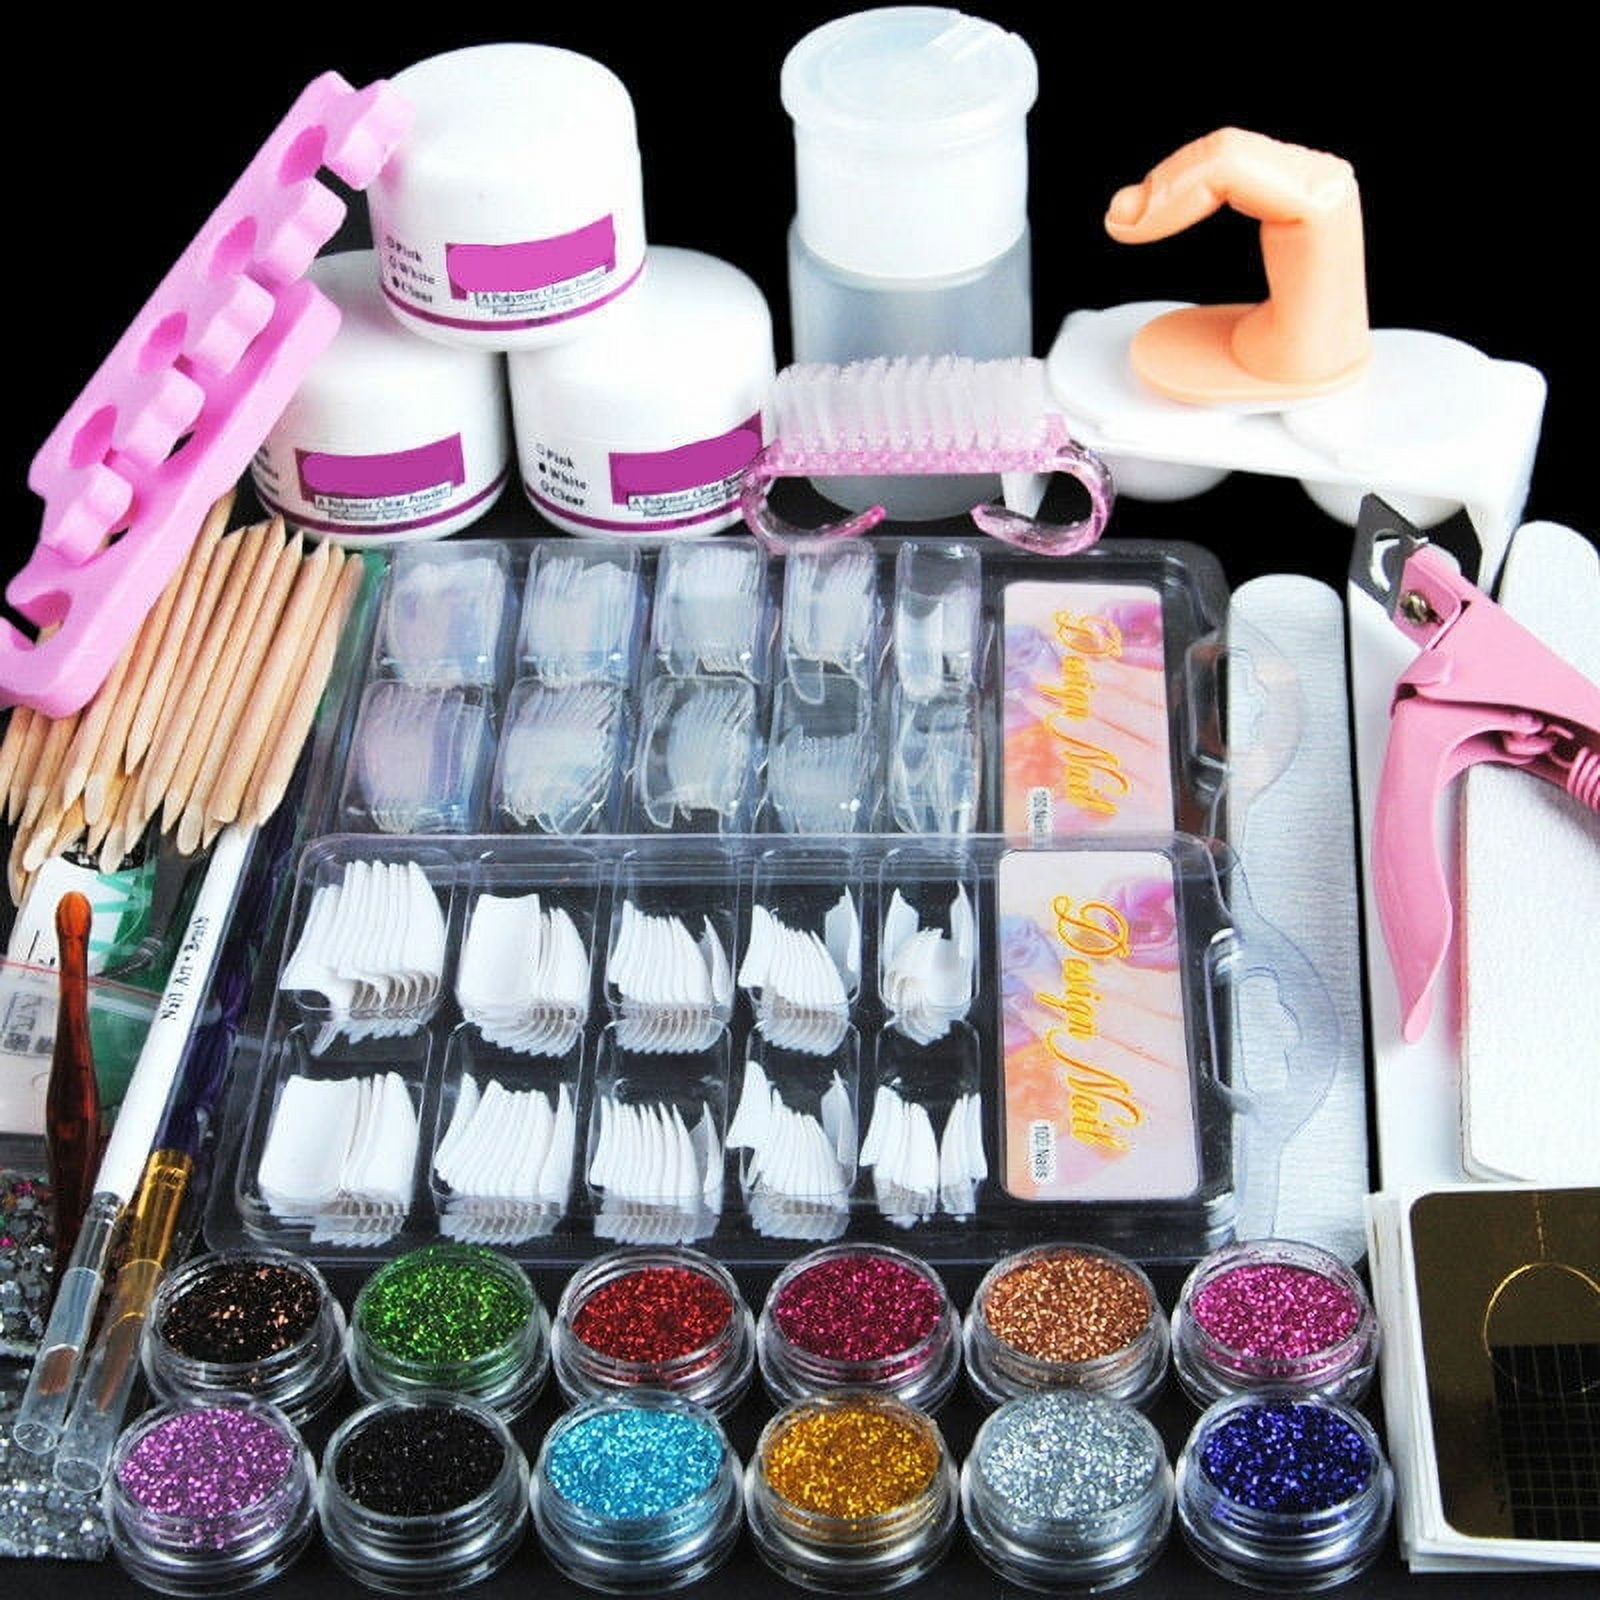 Hmount Deeroll Nail Art Kit, Acrylic Powder Liquid Brush Glitter Clipper Primer File Nail Art Tips Set Kit, Size: One Size